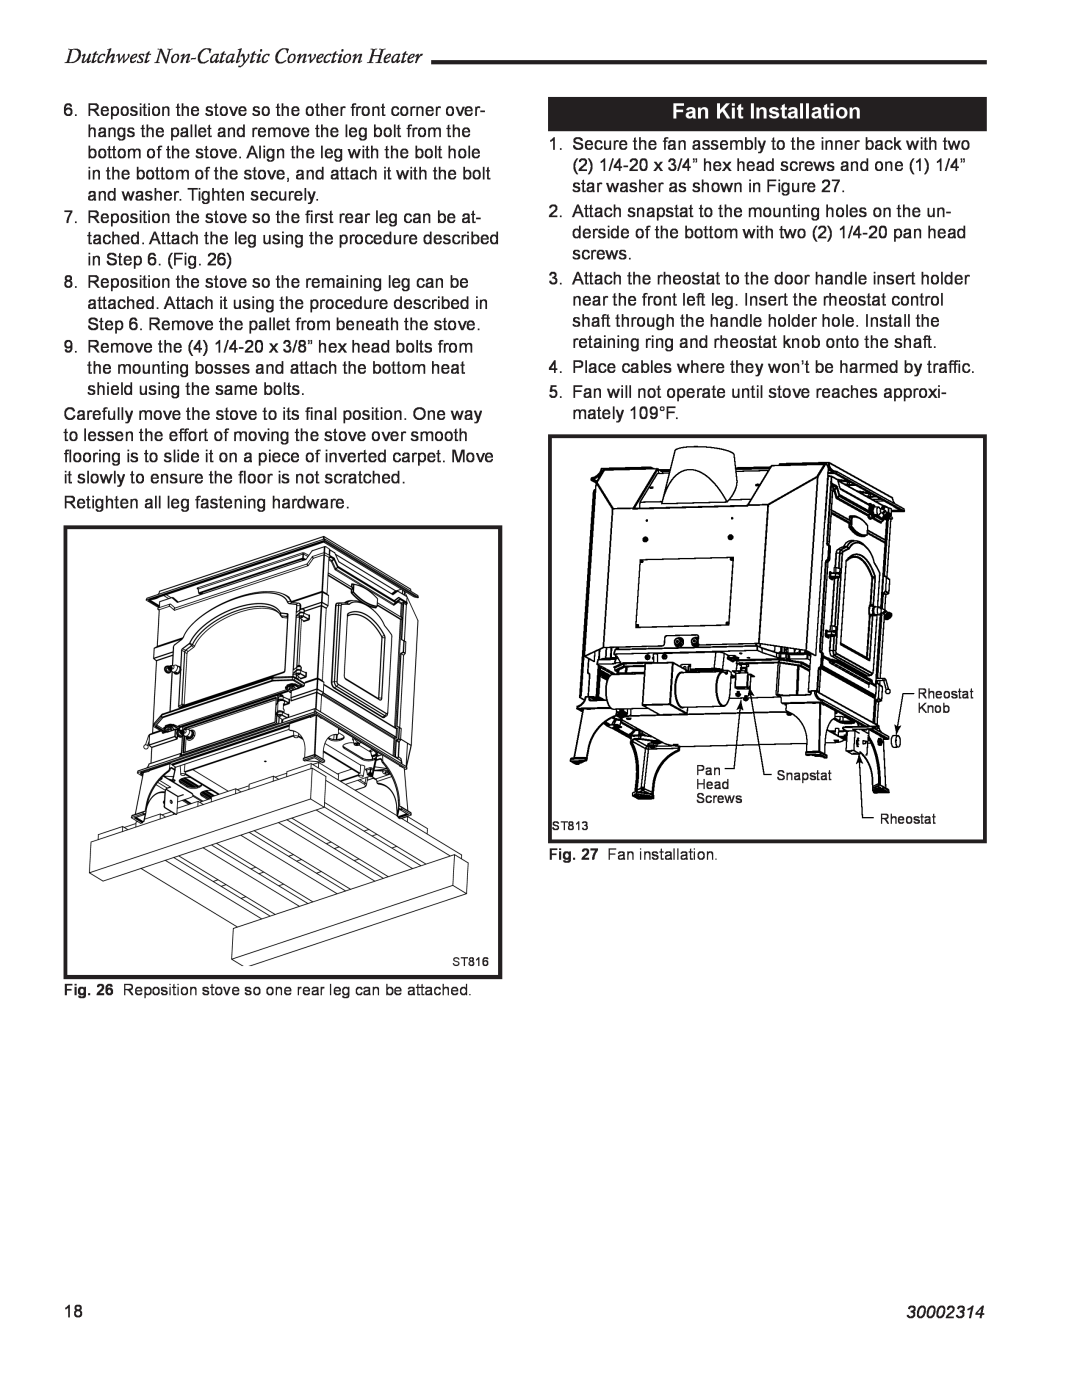 Vermont Casting 2477 manual Fan Kit Installation, Dutchwest Non-CatalyticConvection Heater, 30002314 